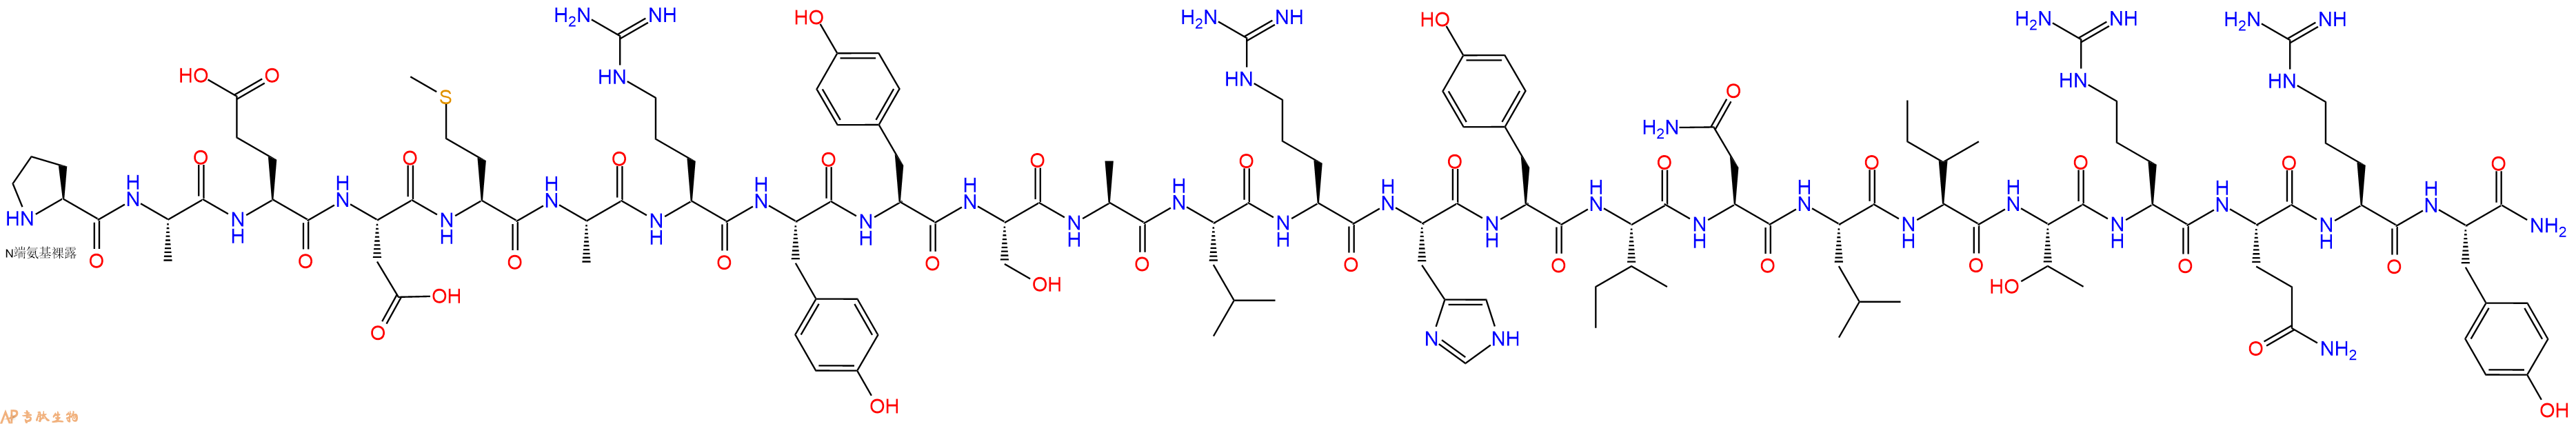 专肽生物产品神经肽YNeuro Peptide Y(13-36), human122341-40-6